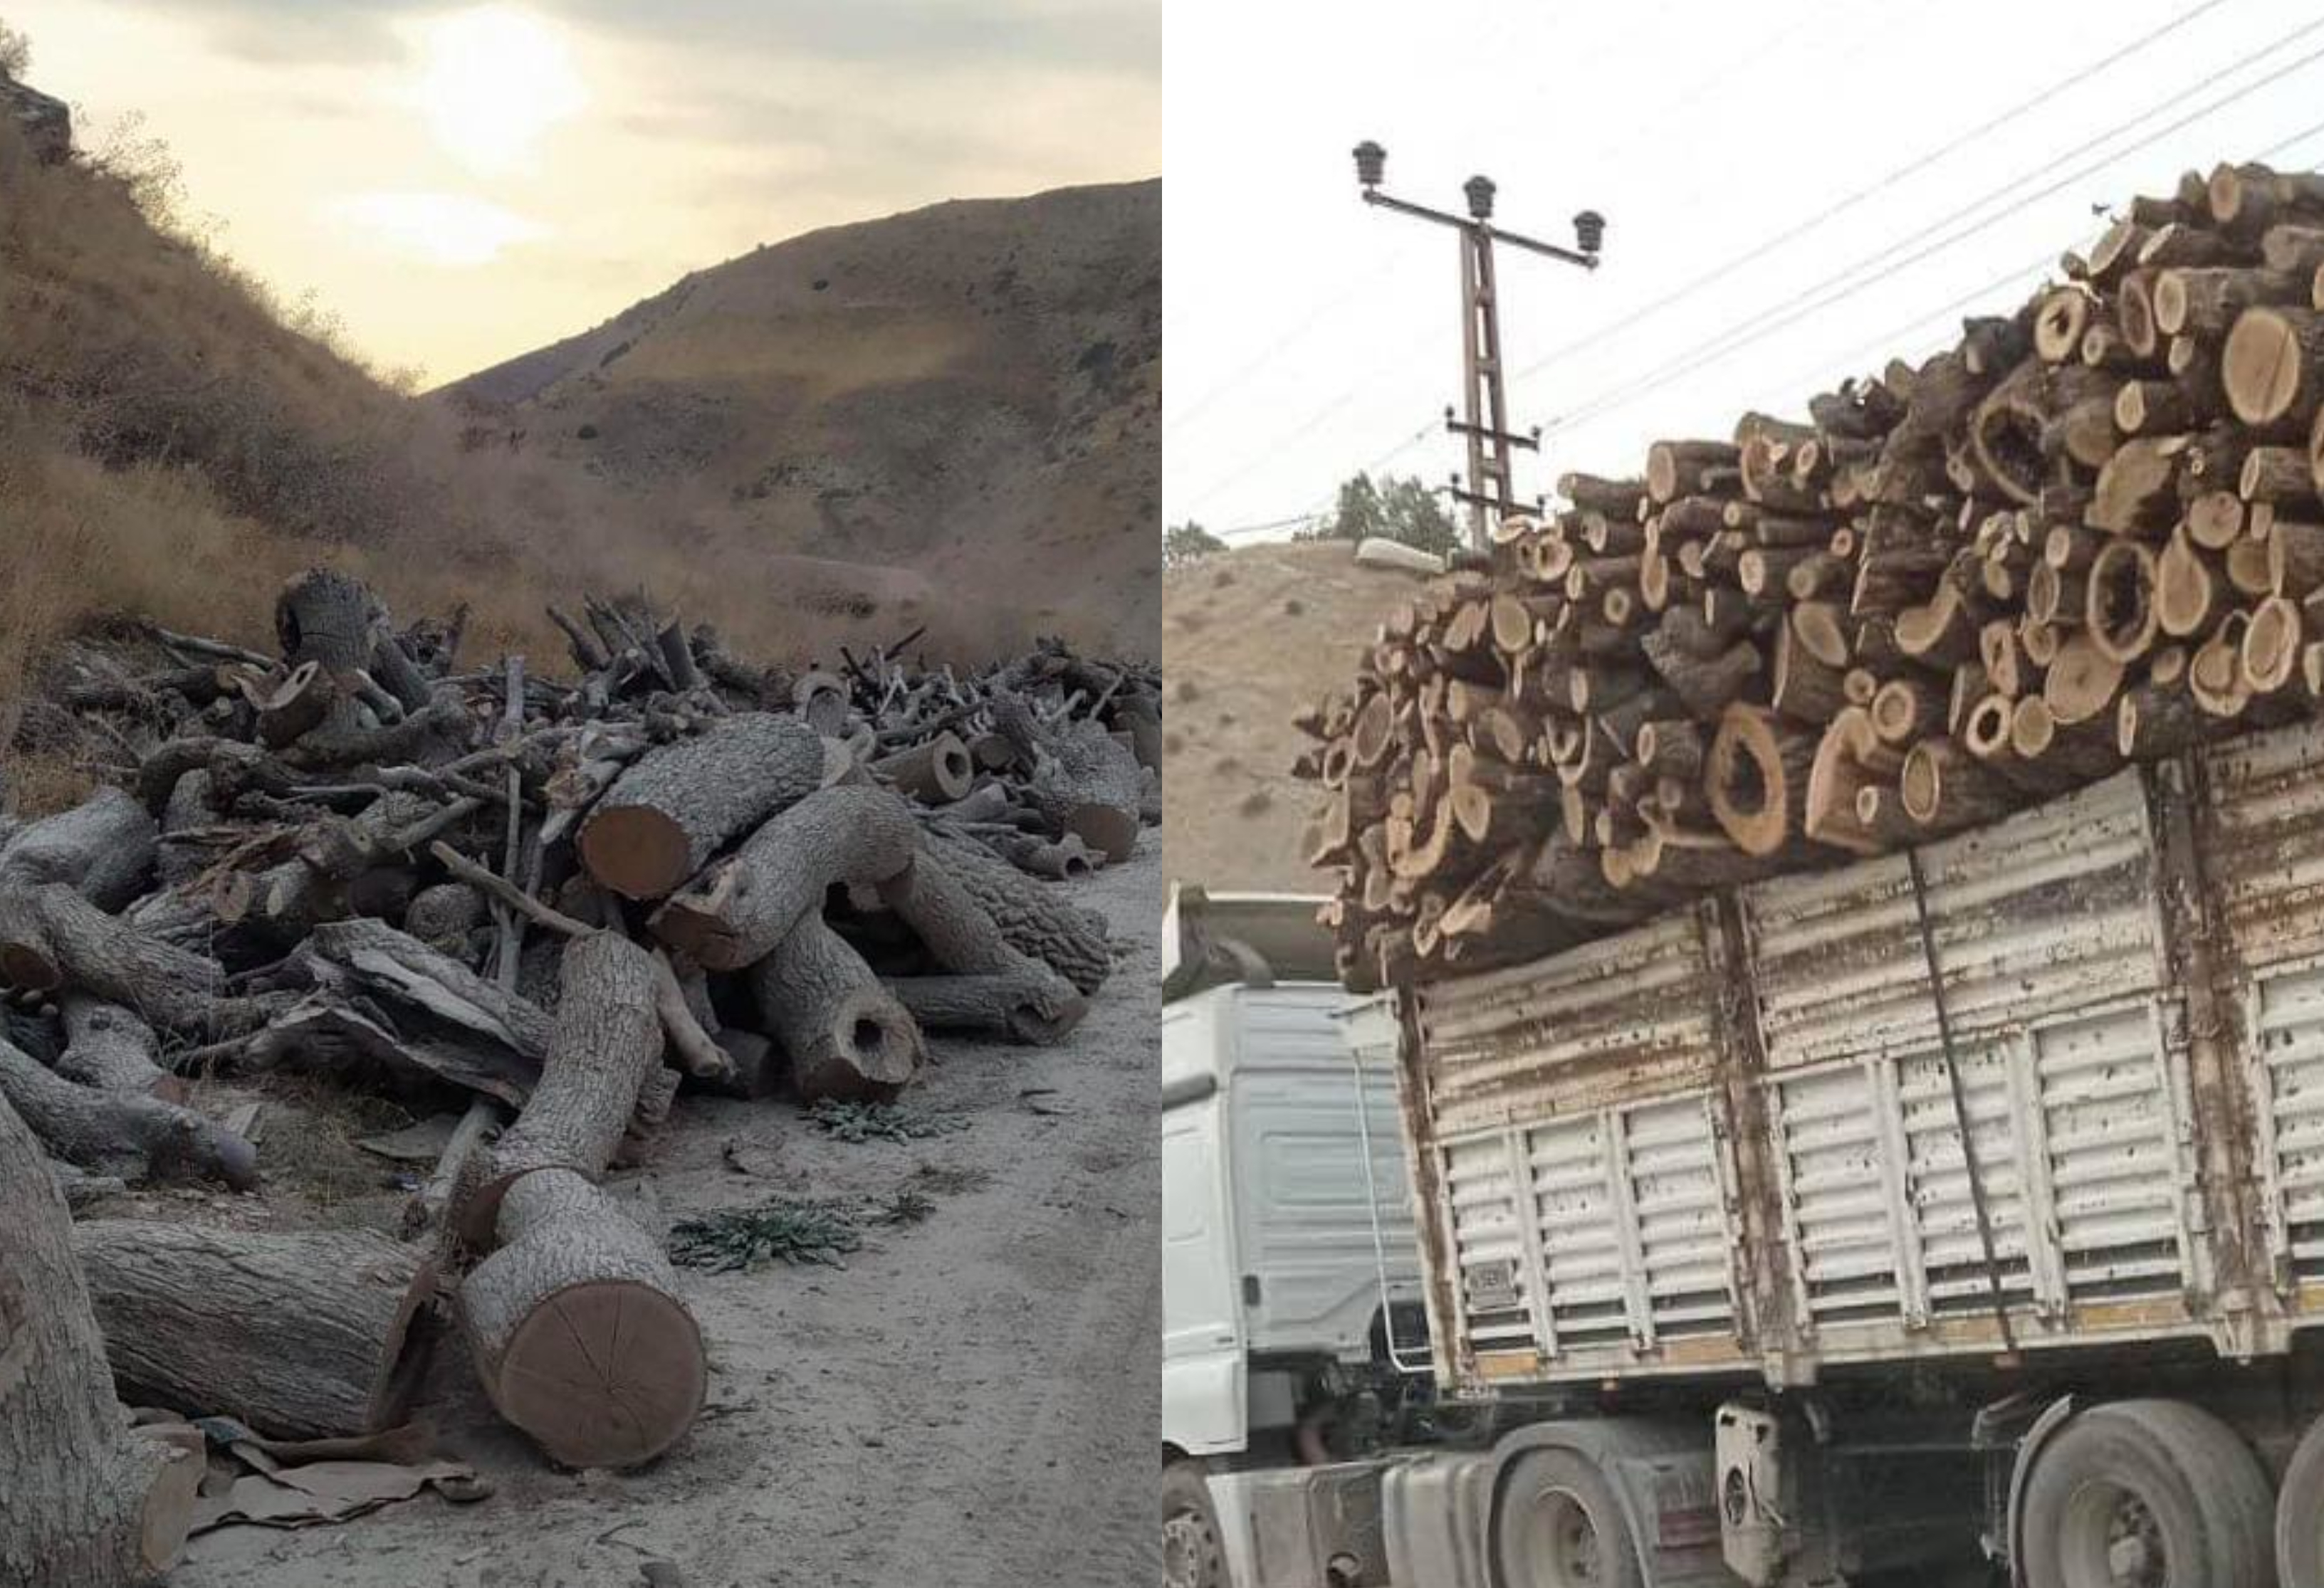 Turkey accused of 'stealing' trees in Iraqi Kurdistan logging campaign